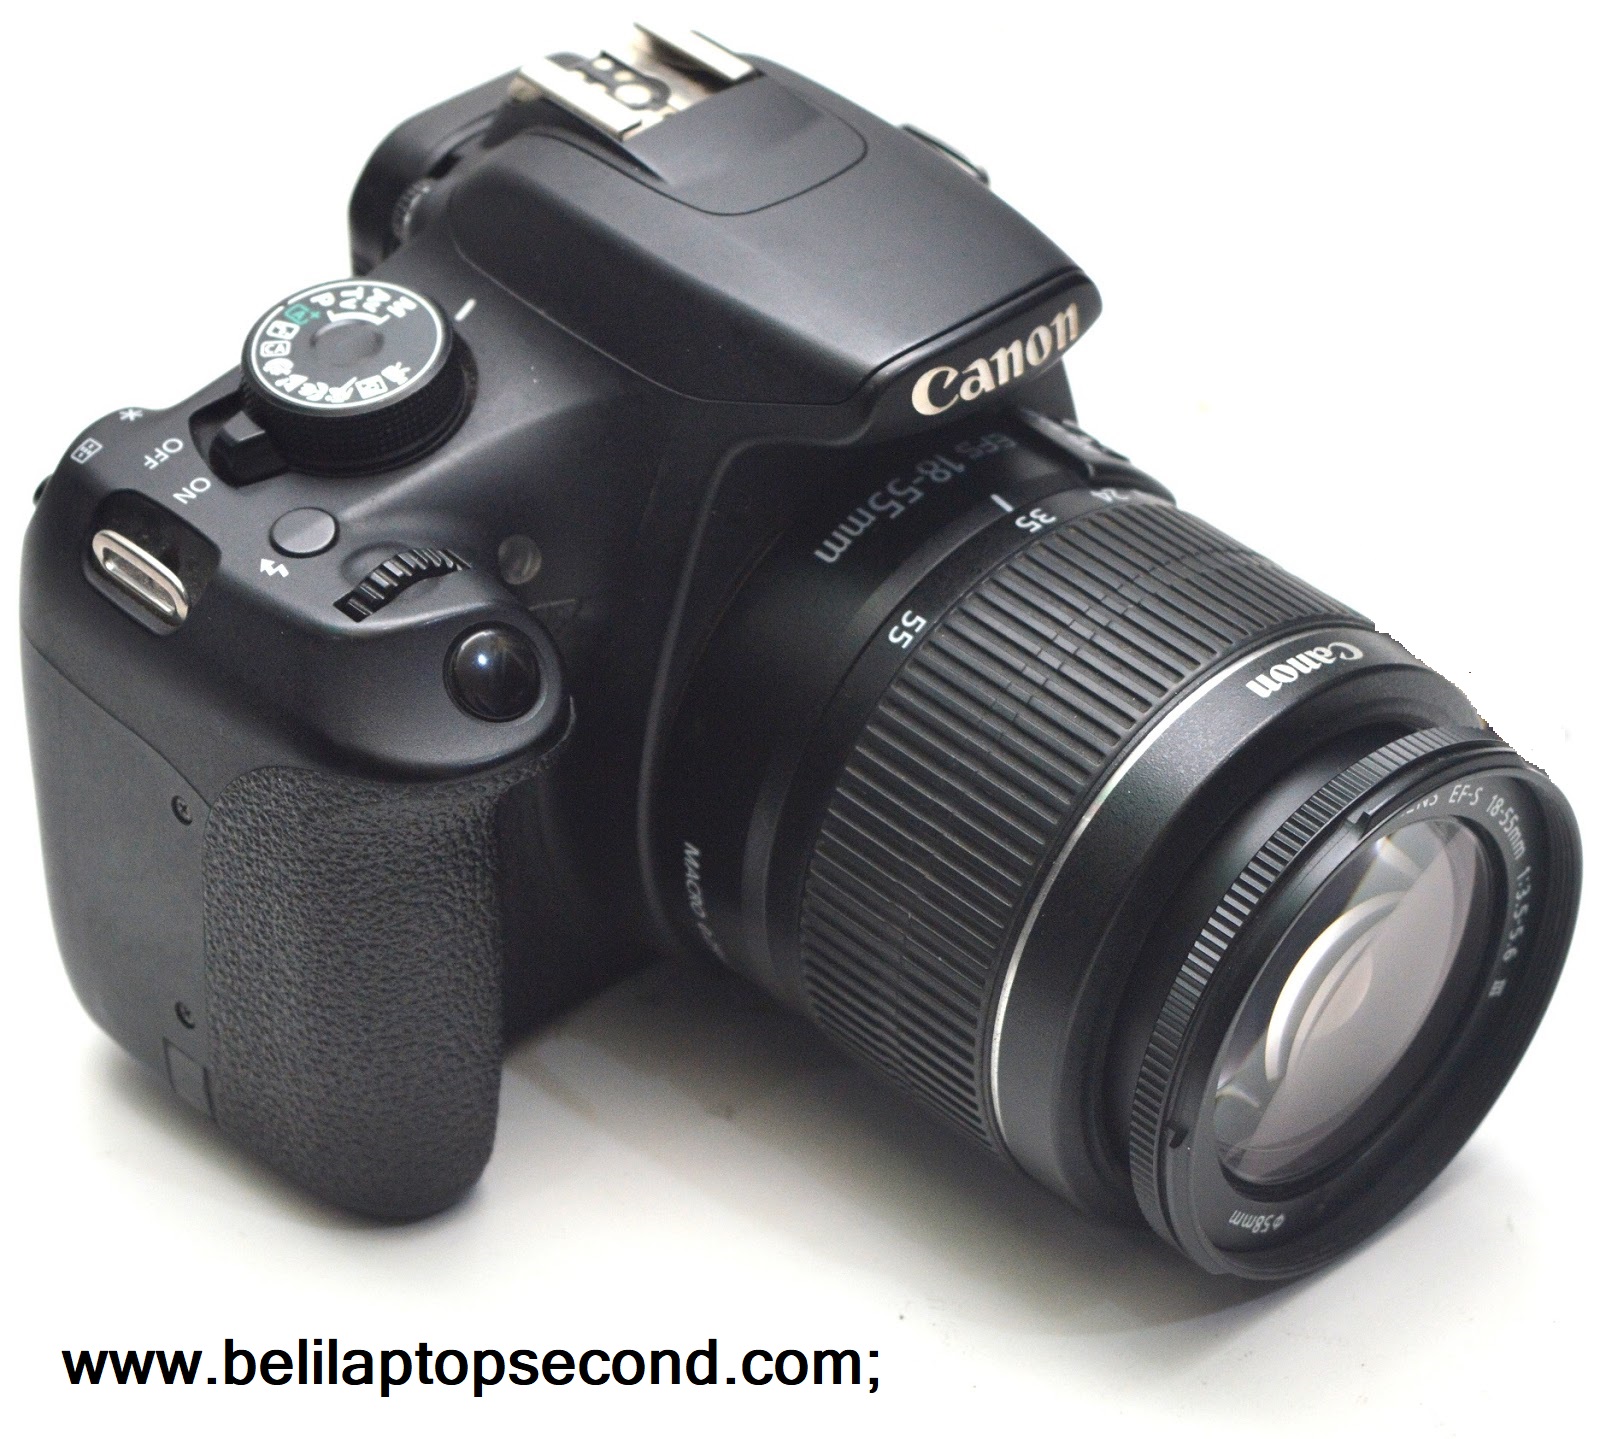  Jual  Kamera  DSLR Canon Eos 1200D Fullset Bekas Jual  Beli  